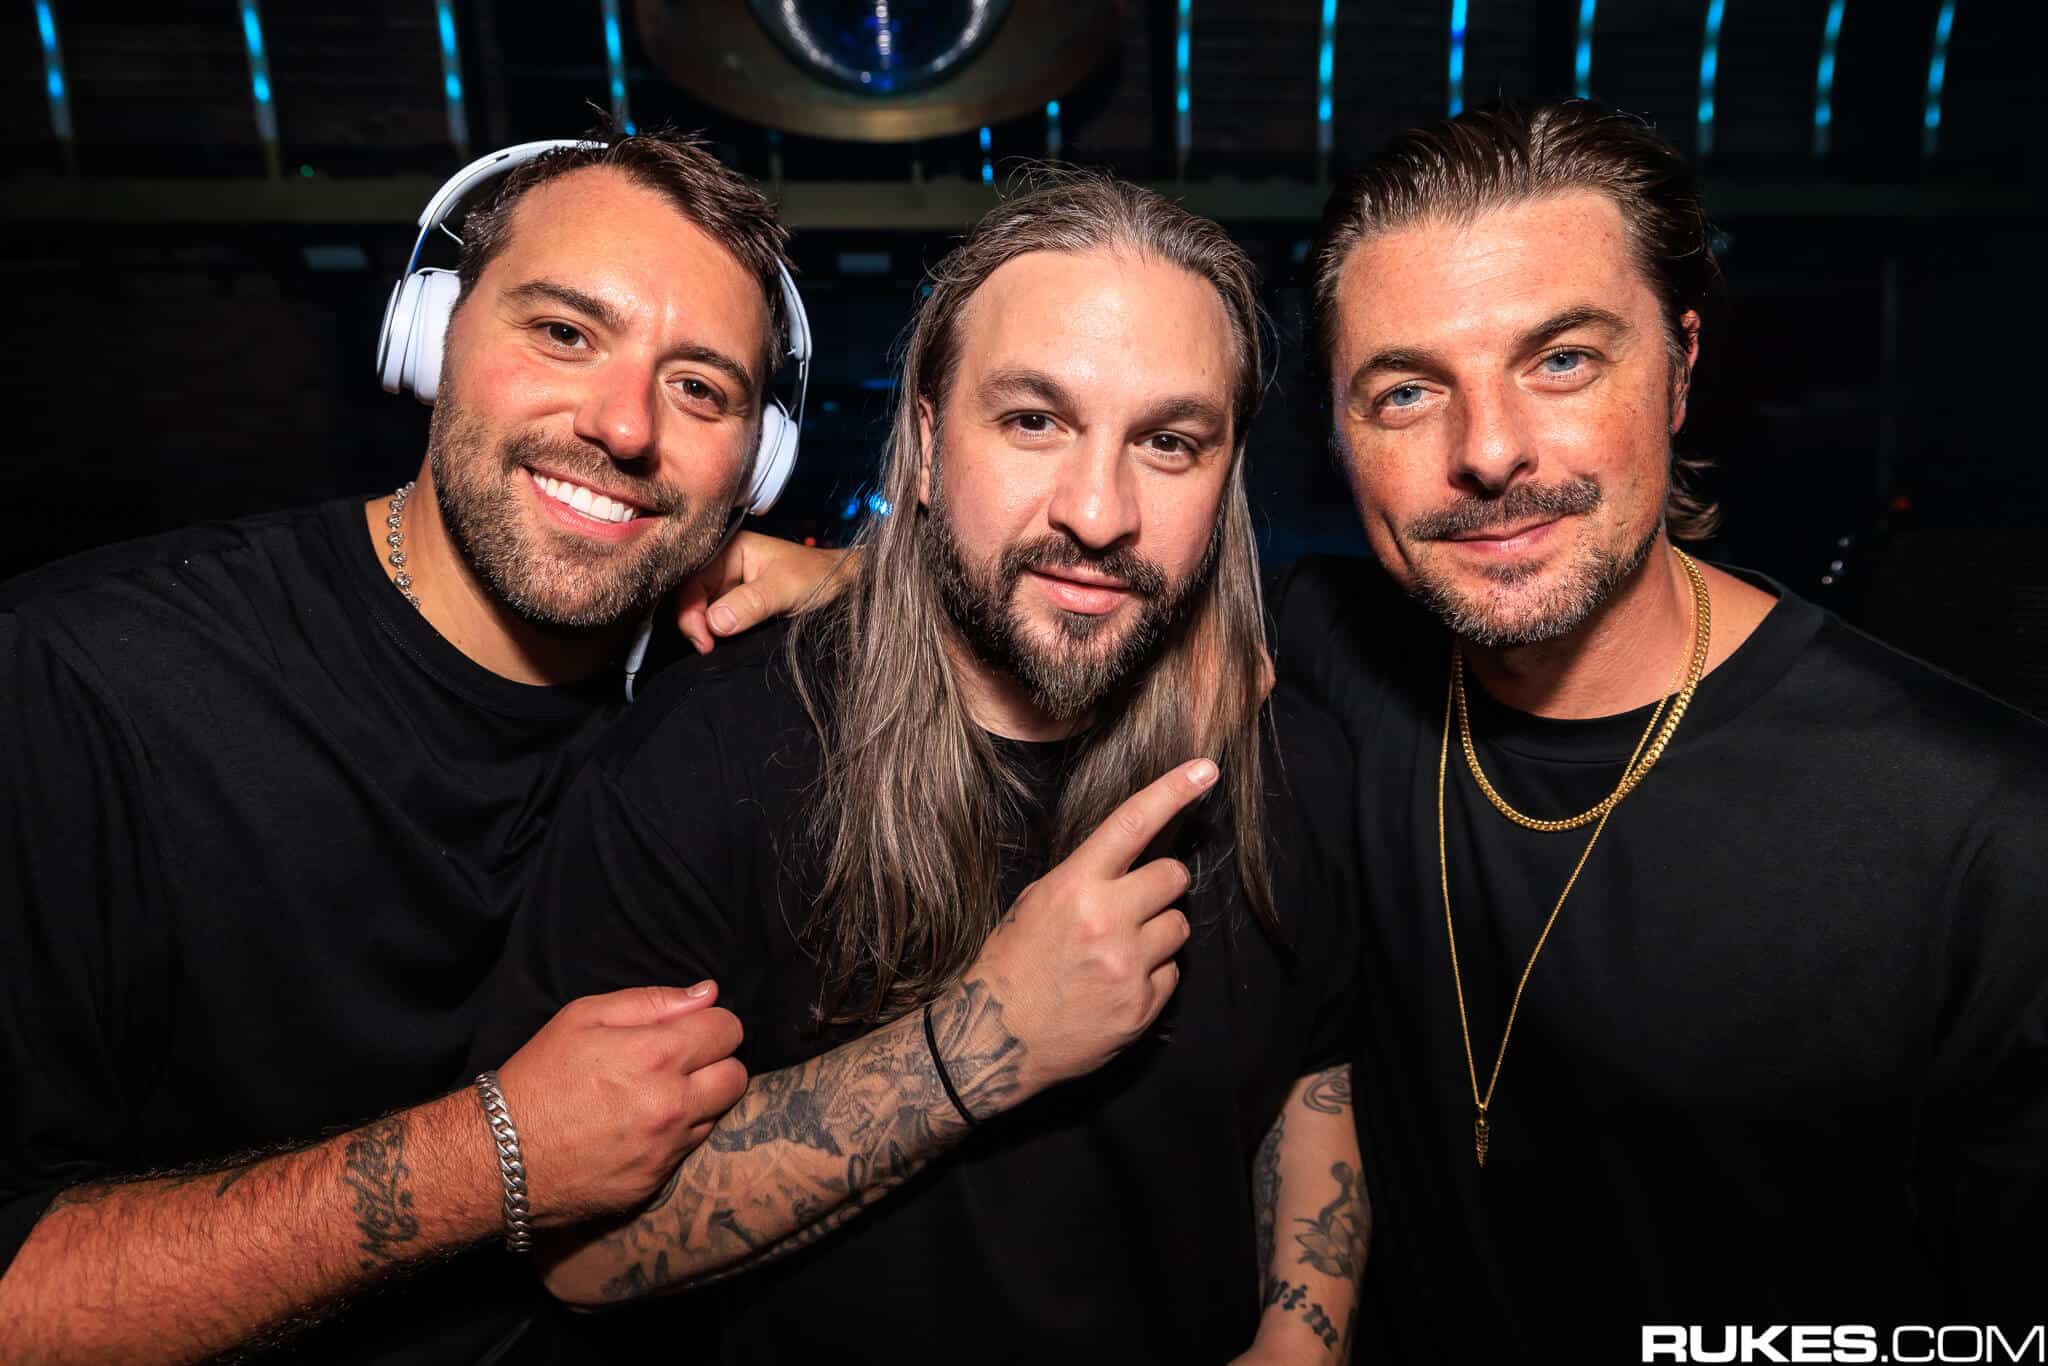 Swedish House Mafia will return to Ushuaïa Ibiza this summer